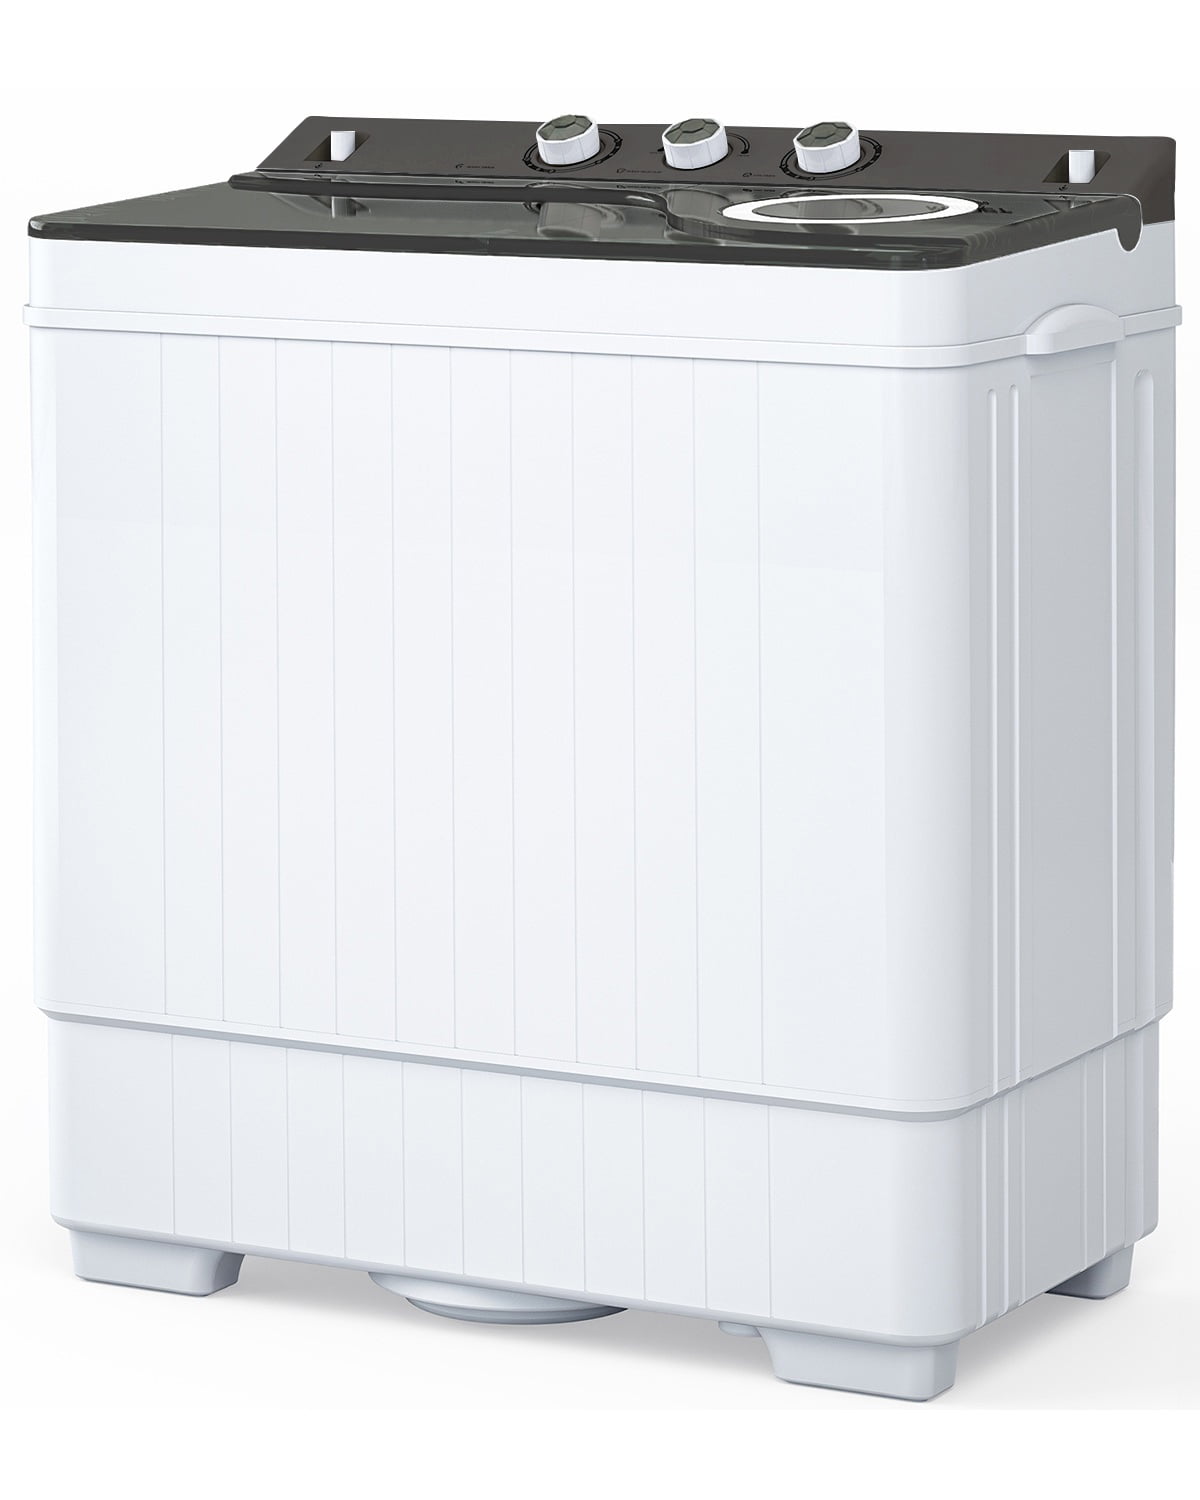 Giantex Washing Machine, Portable Clothes Washing Machines, 13lbs Washer  and Spinner Combo, Semi-Automatic Laundry Machine, Compact Twin Tub Mini